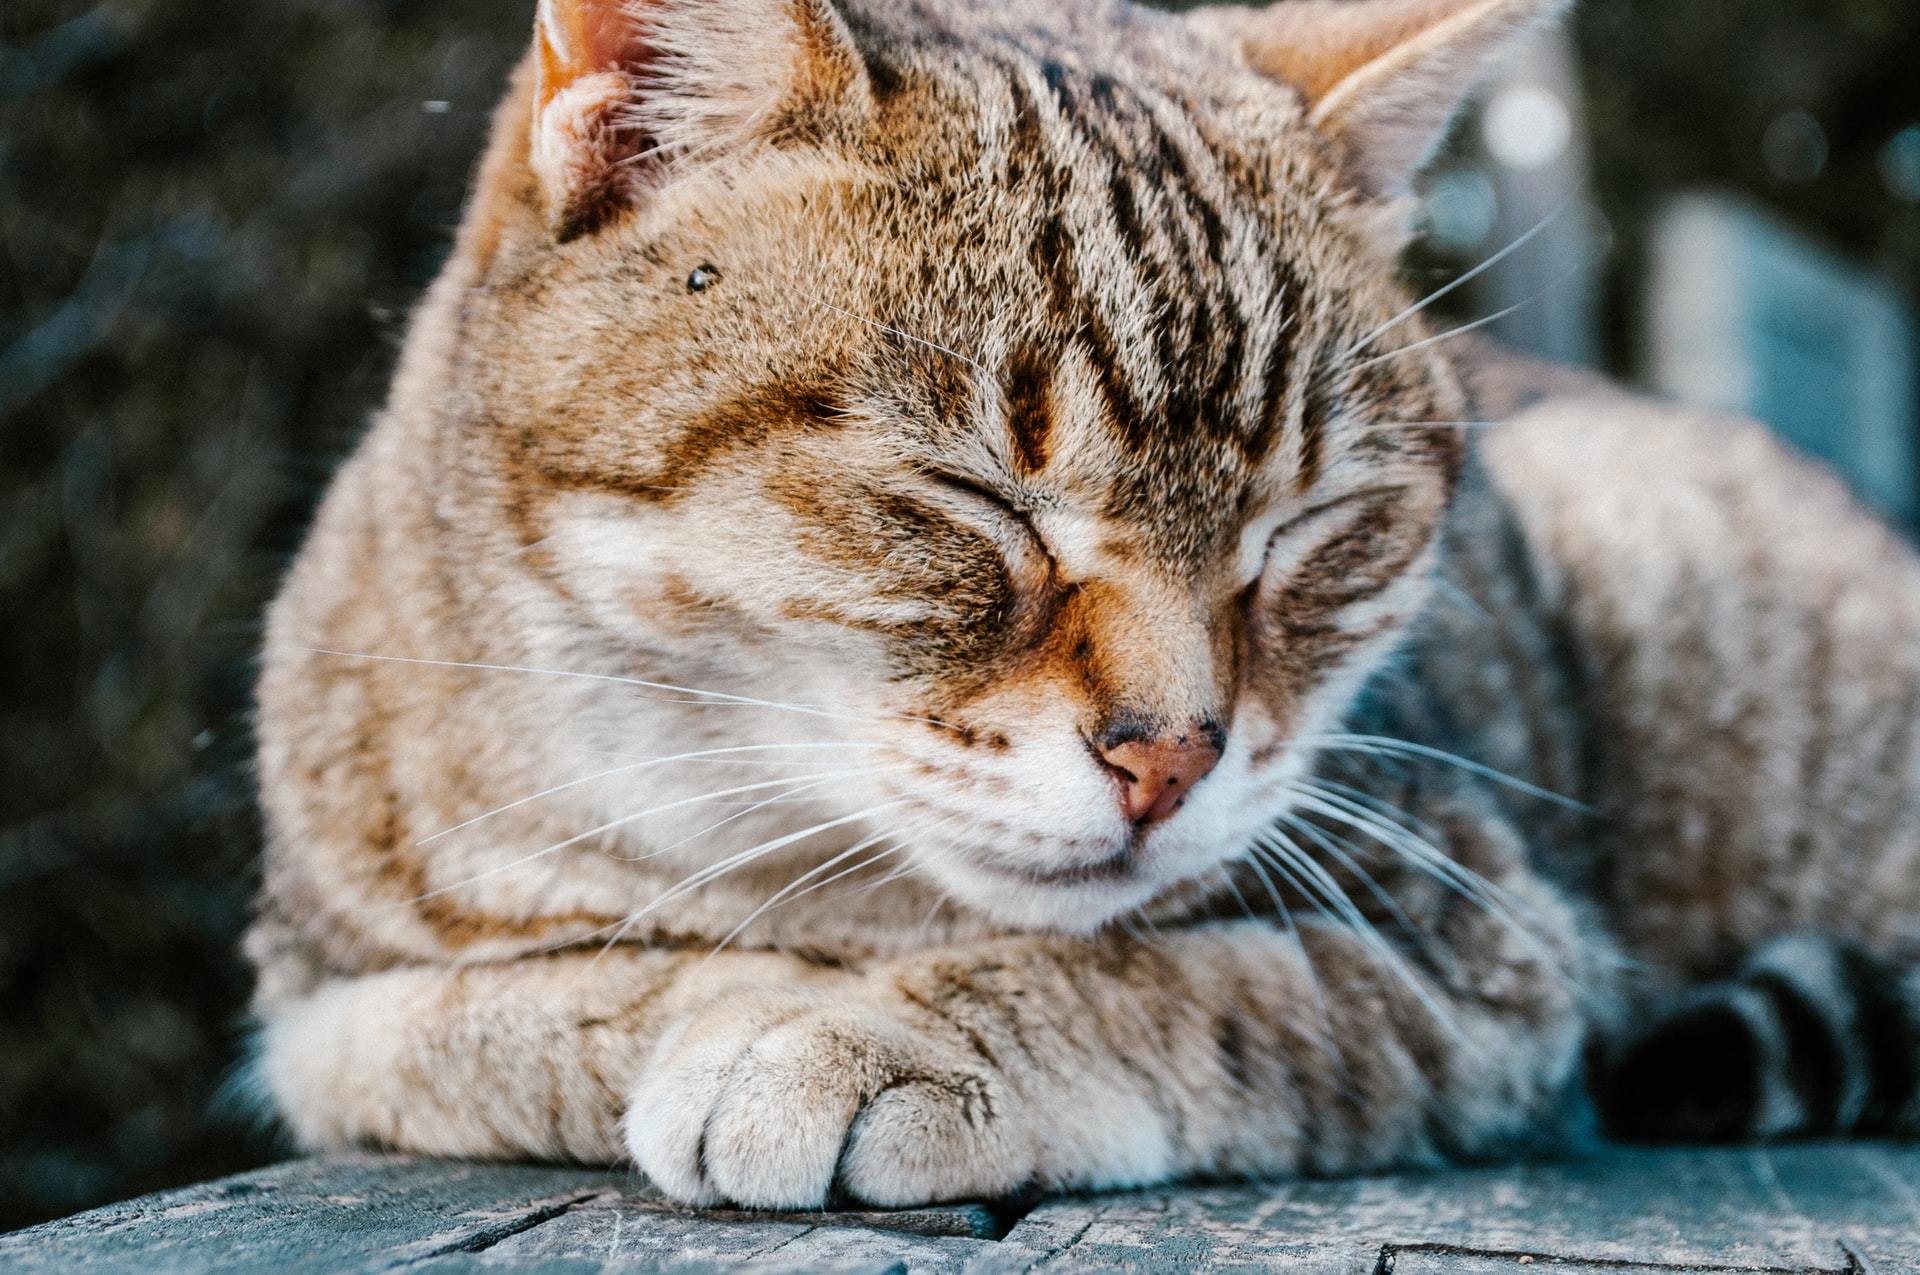 Is Charming Dieffenbachia Toxic to Cats? 